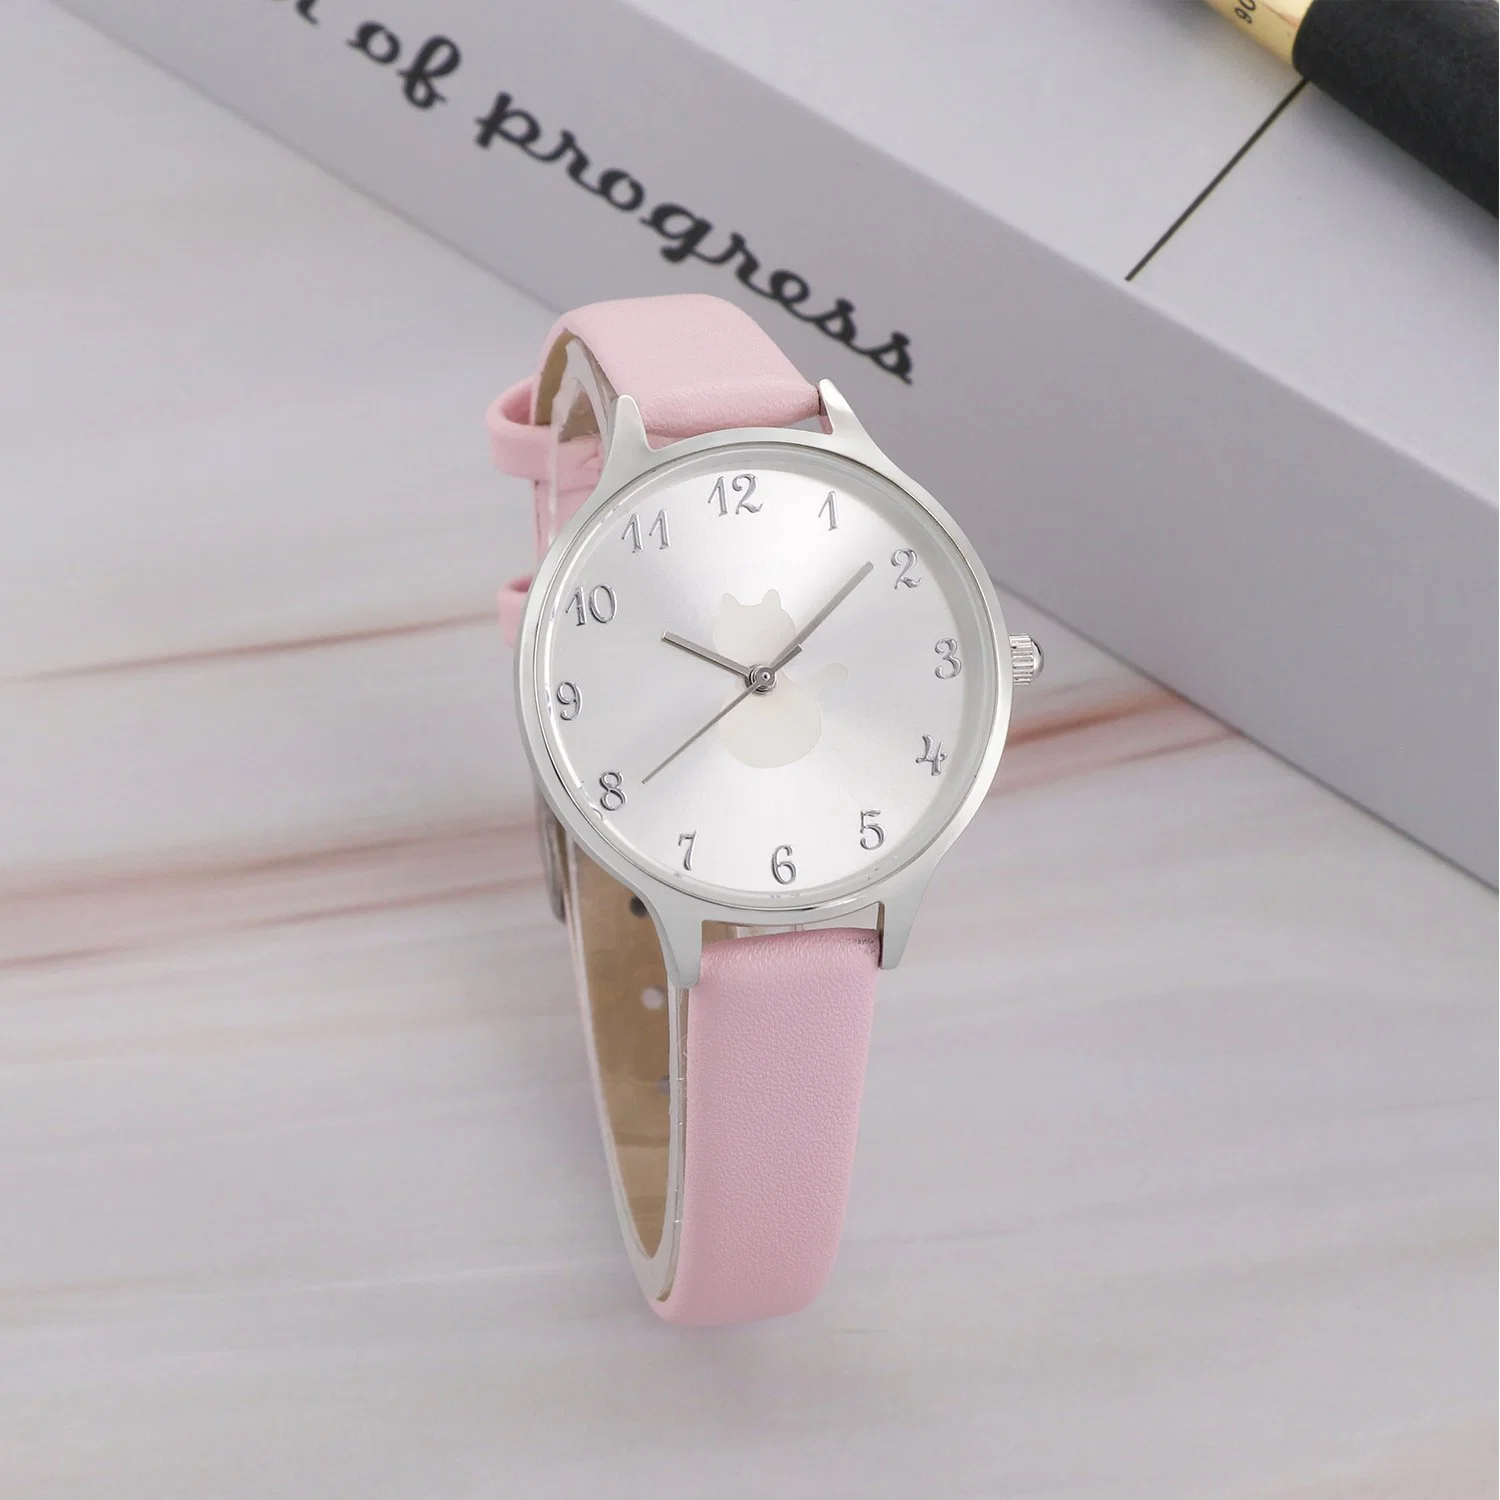 Hot Selling Brand Watches Fashion Ladies Quartz Watch Wholesale Leather Gift Watches Wrist Watch Analog Women Watch